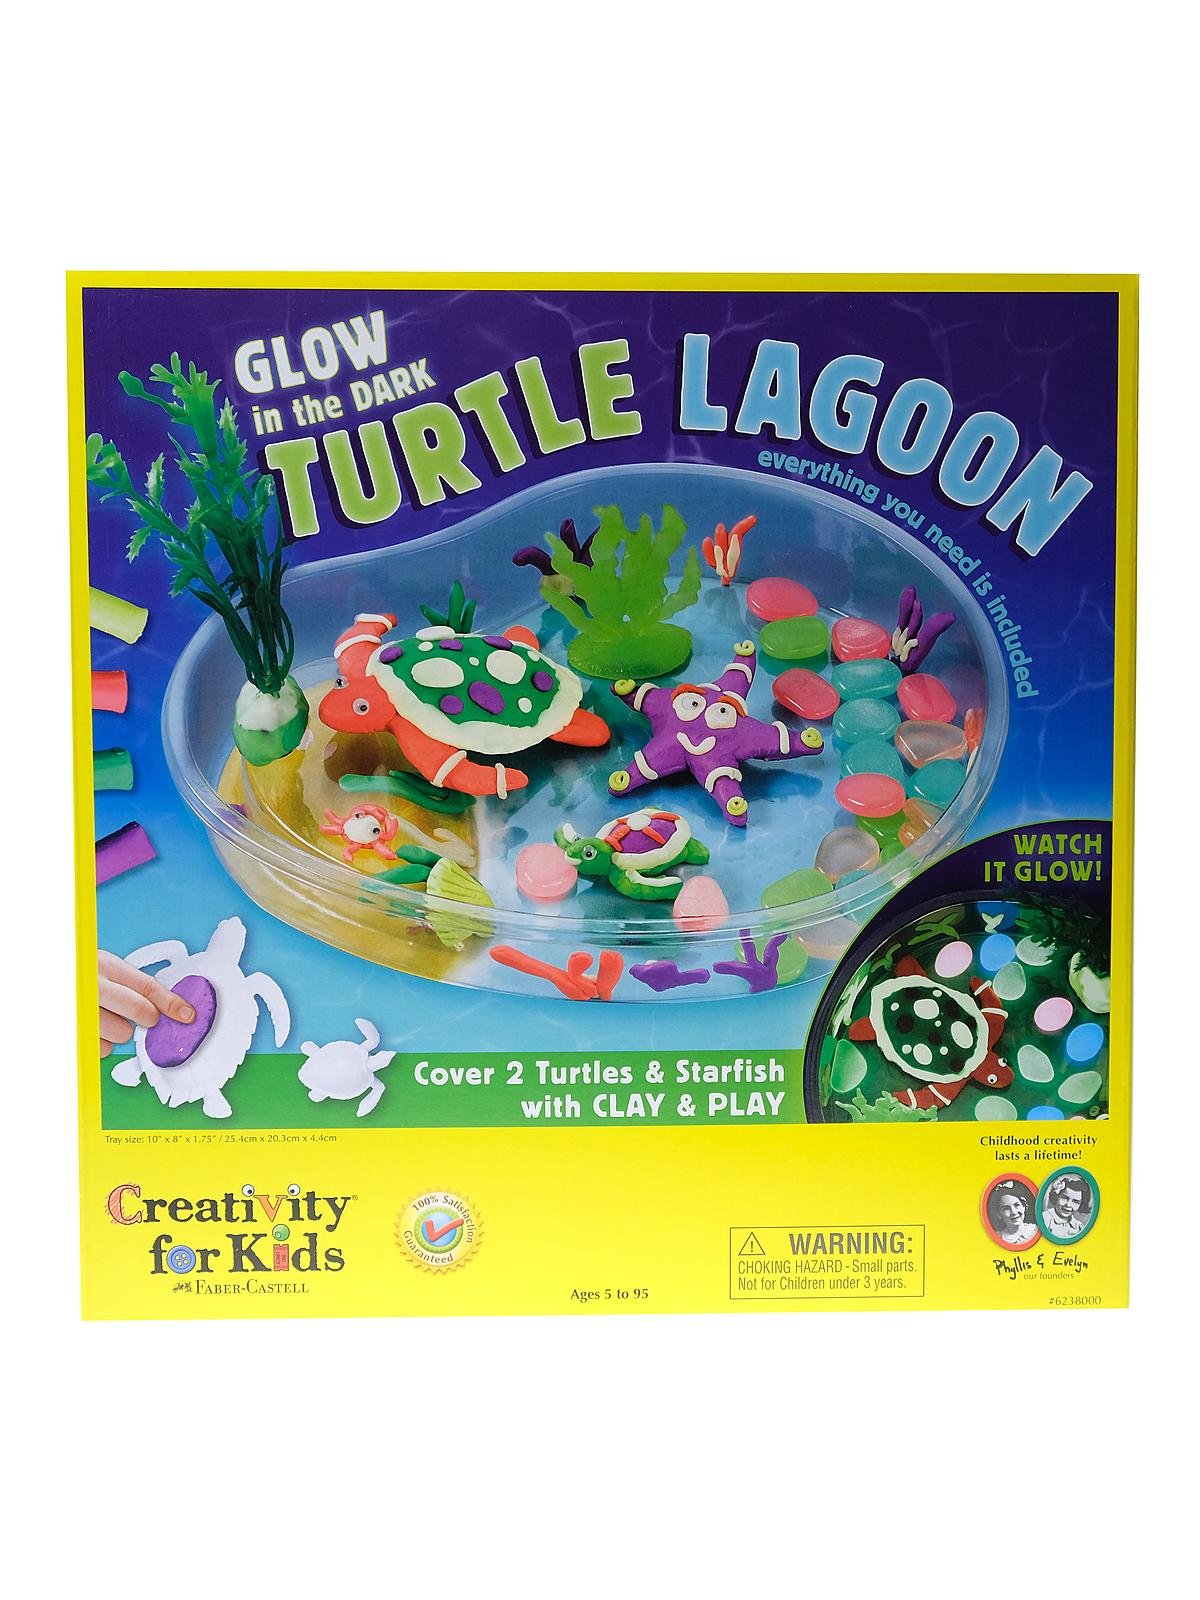 Creativity For Kids - Glow in the Dark Turtle Lagoon